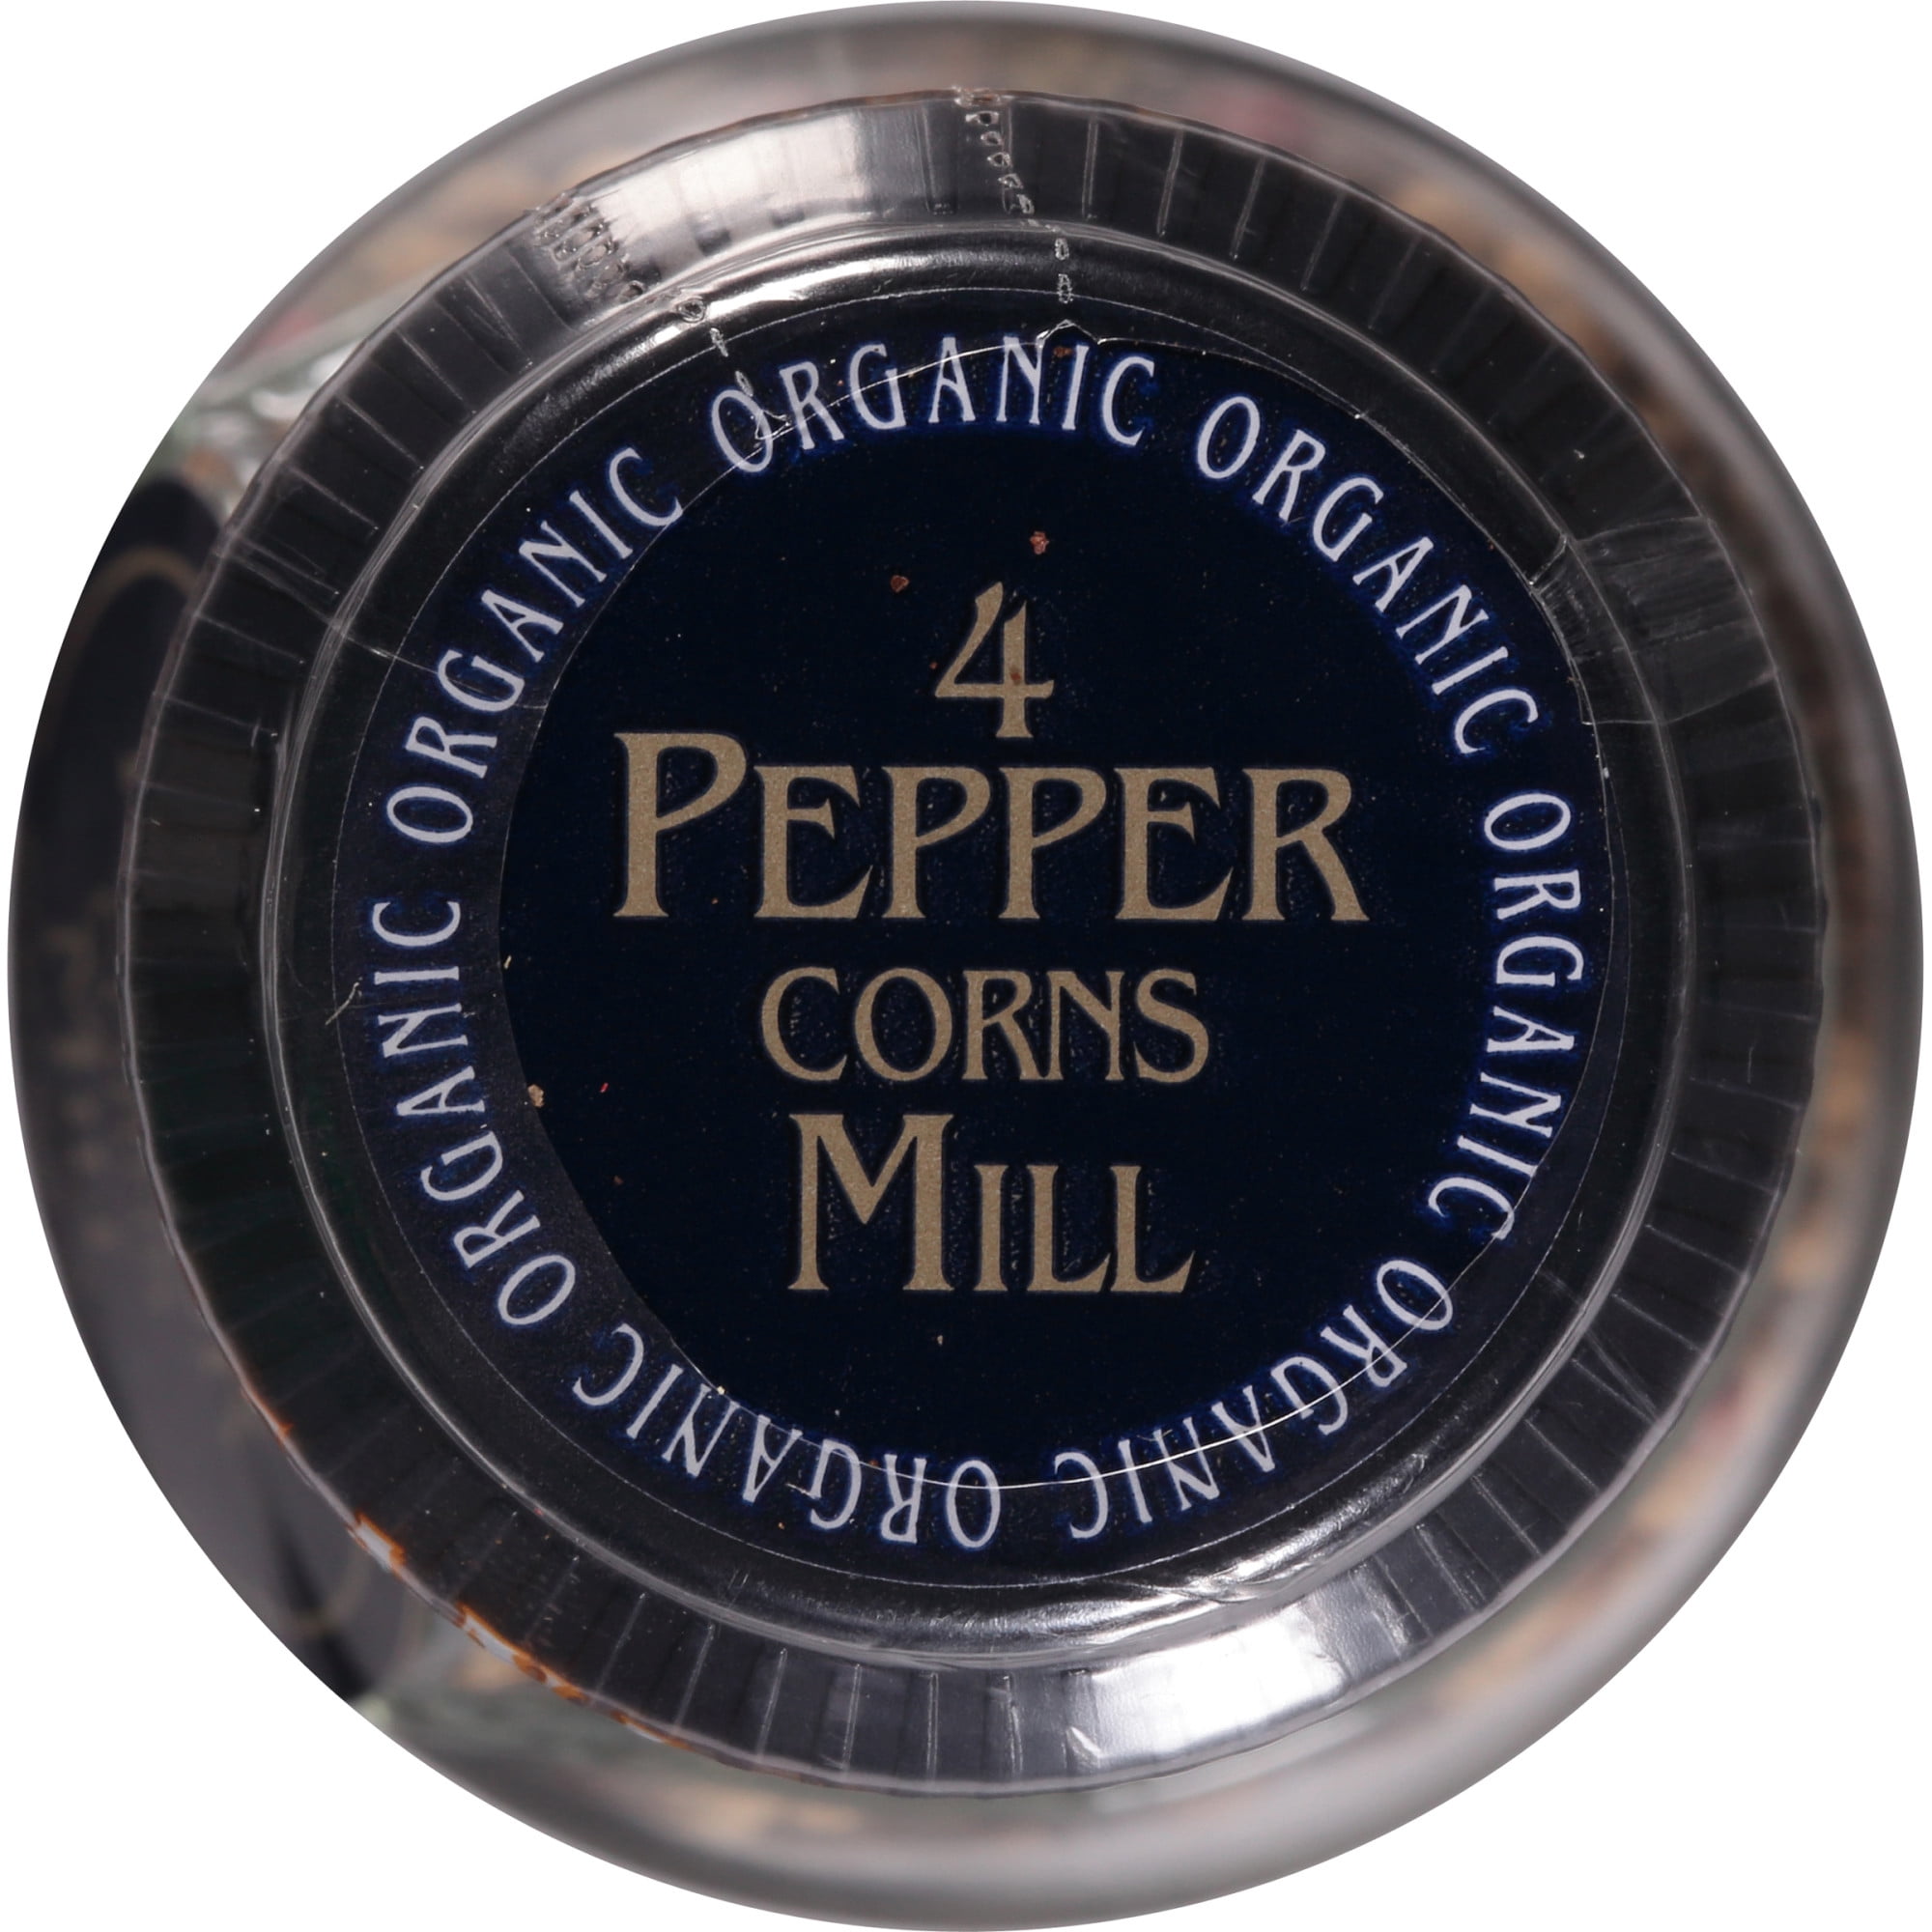 Drogheria & Alimentari® Organic Black Peppercorns Mill, 1.59 oz - Kroger